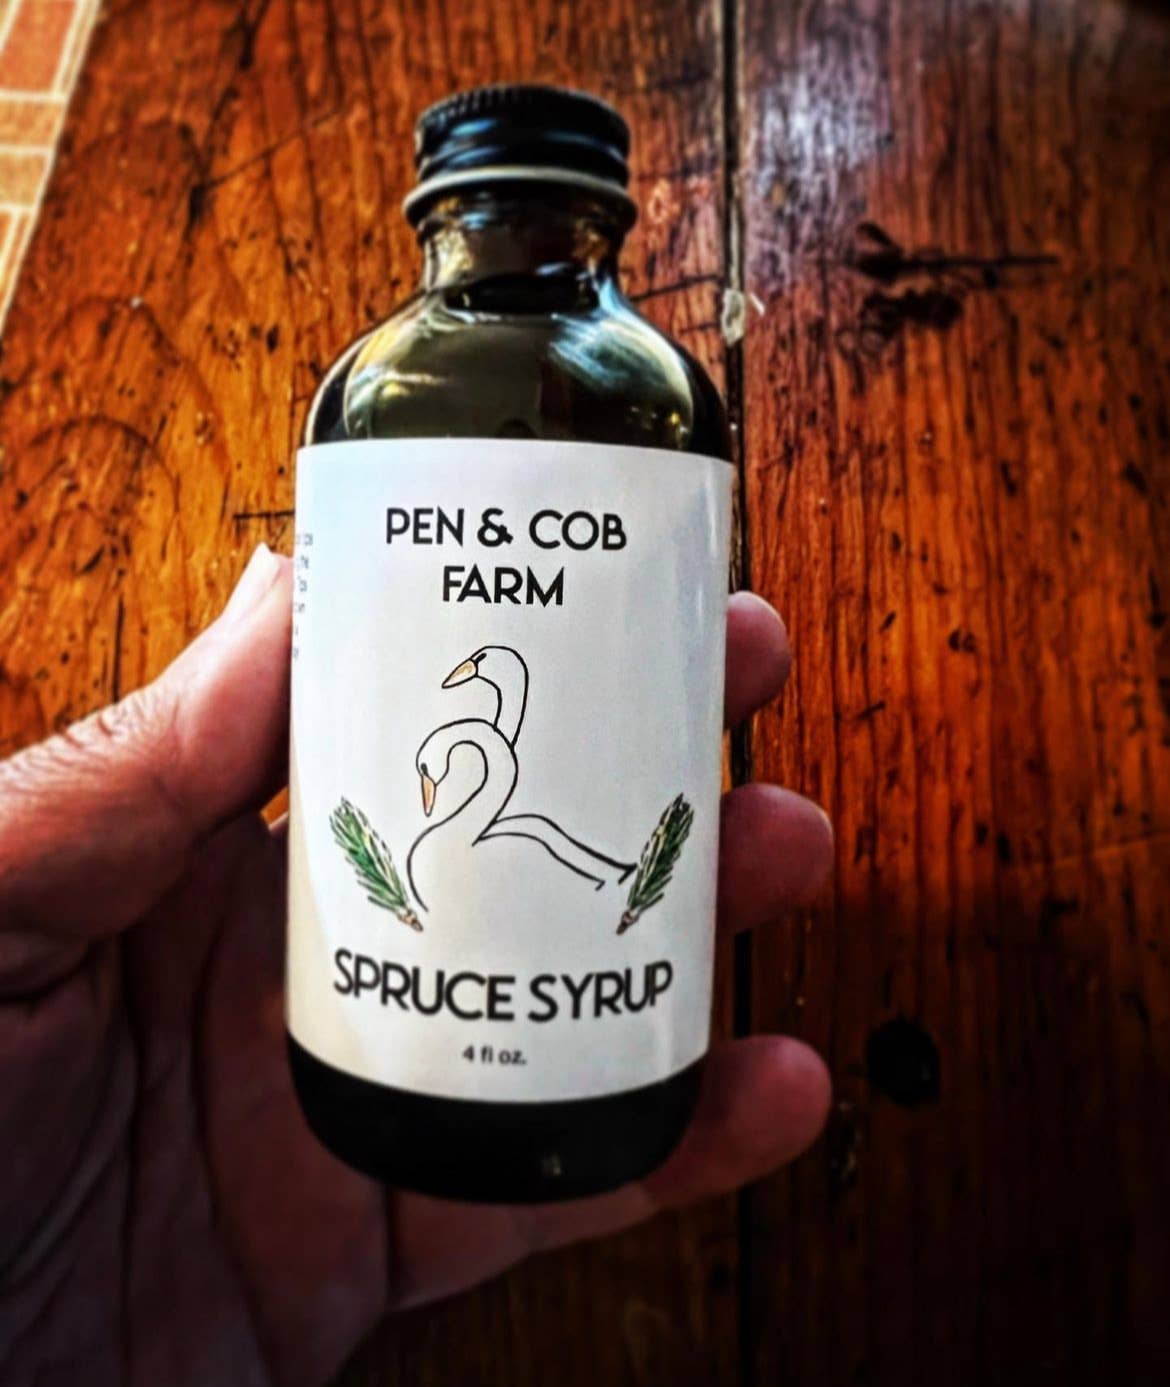 Pen & Cob Farm - Spruce Tip Syrup - Space Camp